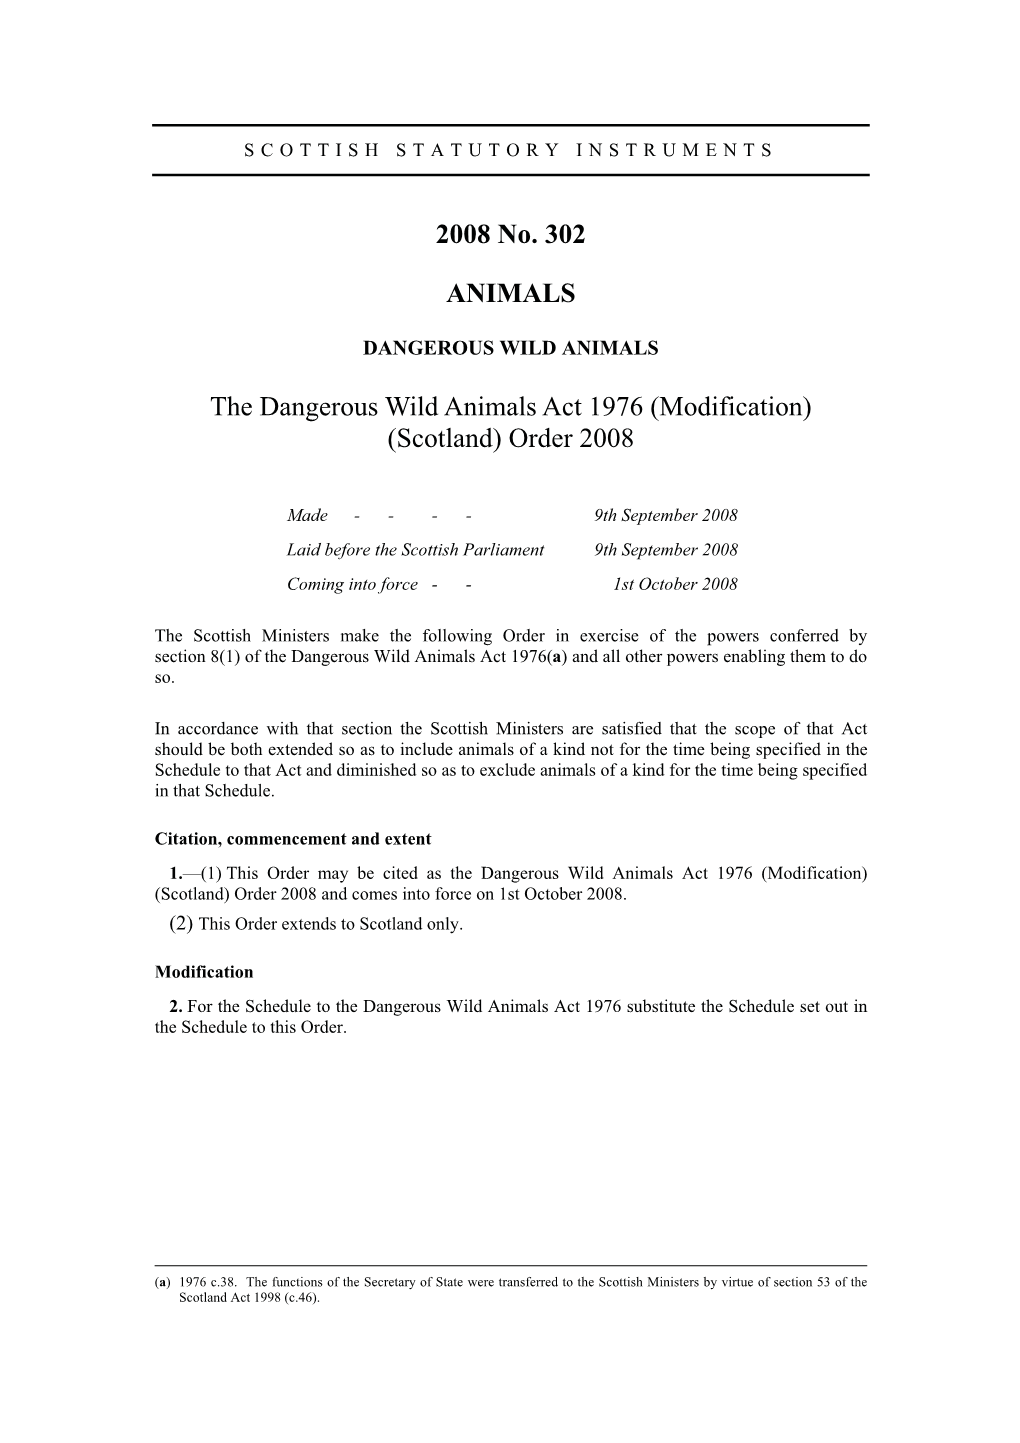 2008 No. 302 ANIMALS the Dangerous Wild Animals Act 1976